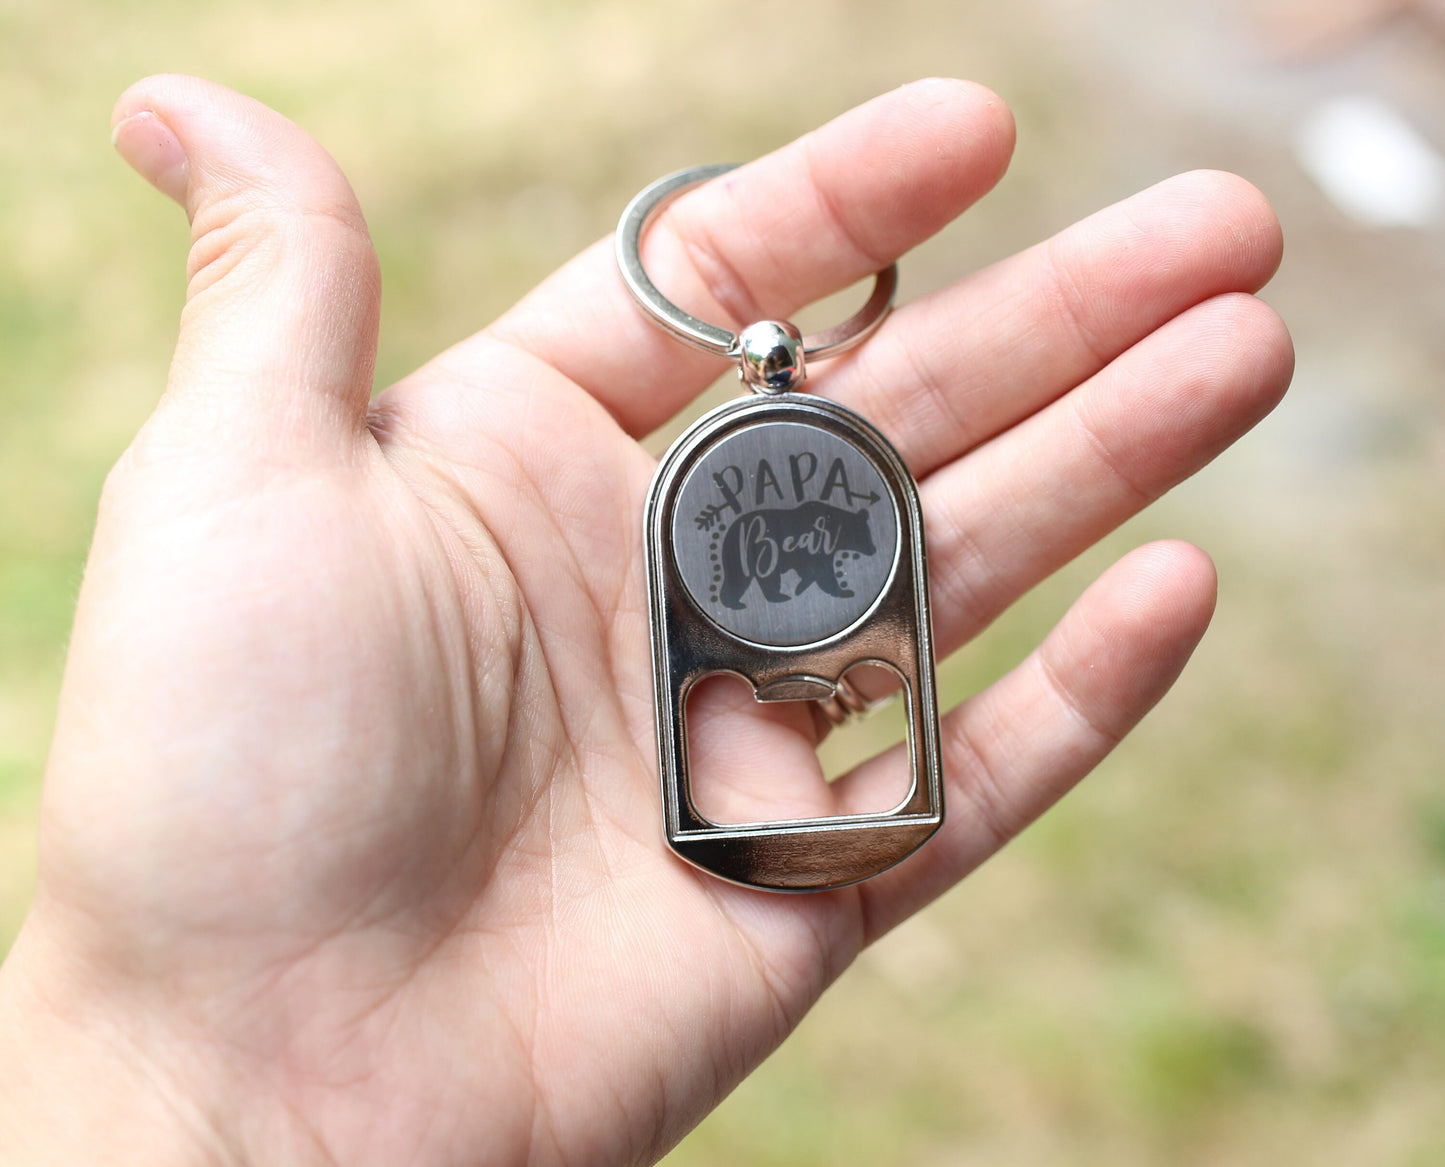 Papa Bear Bottle Opener Keychain // Personalized Keychain // Father's Day Gift // Keychain Accessories // Customizable Keychain